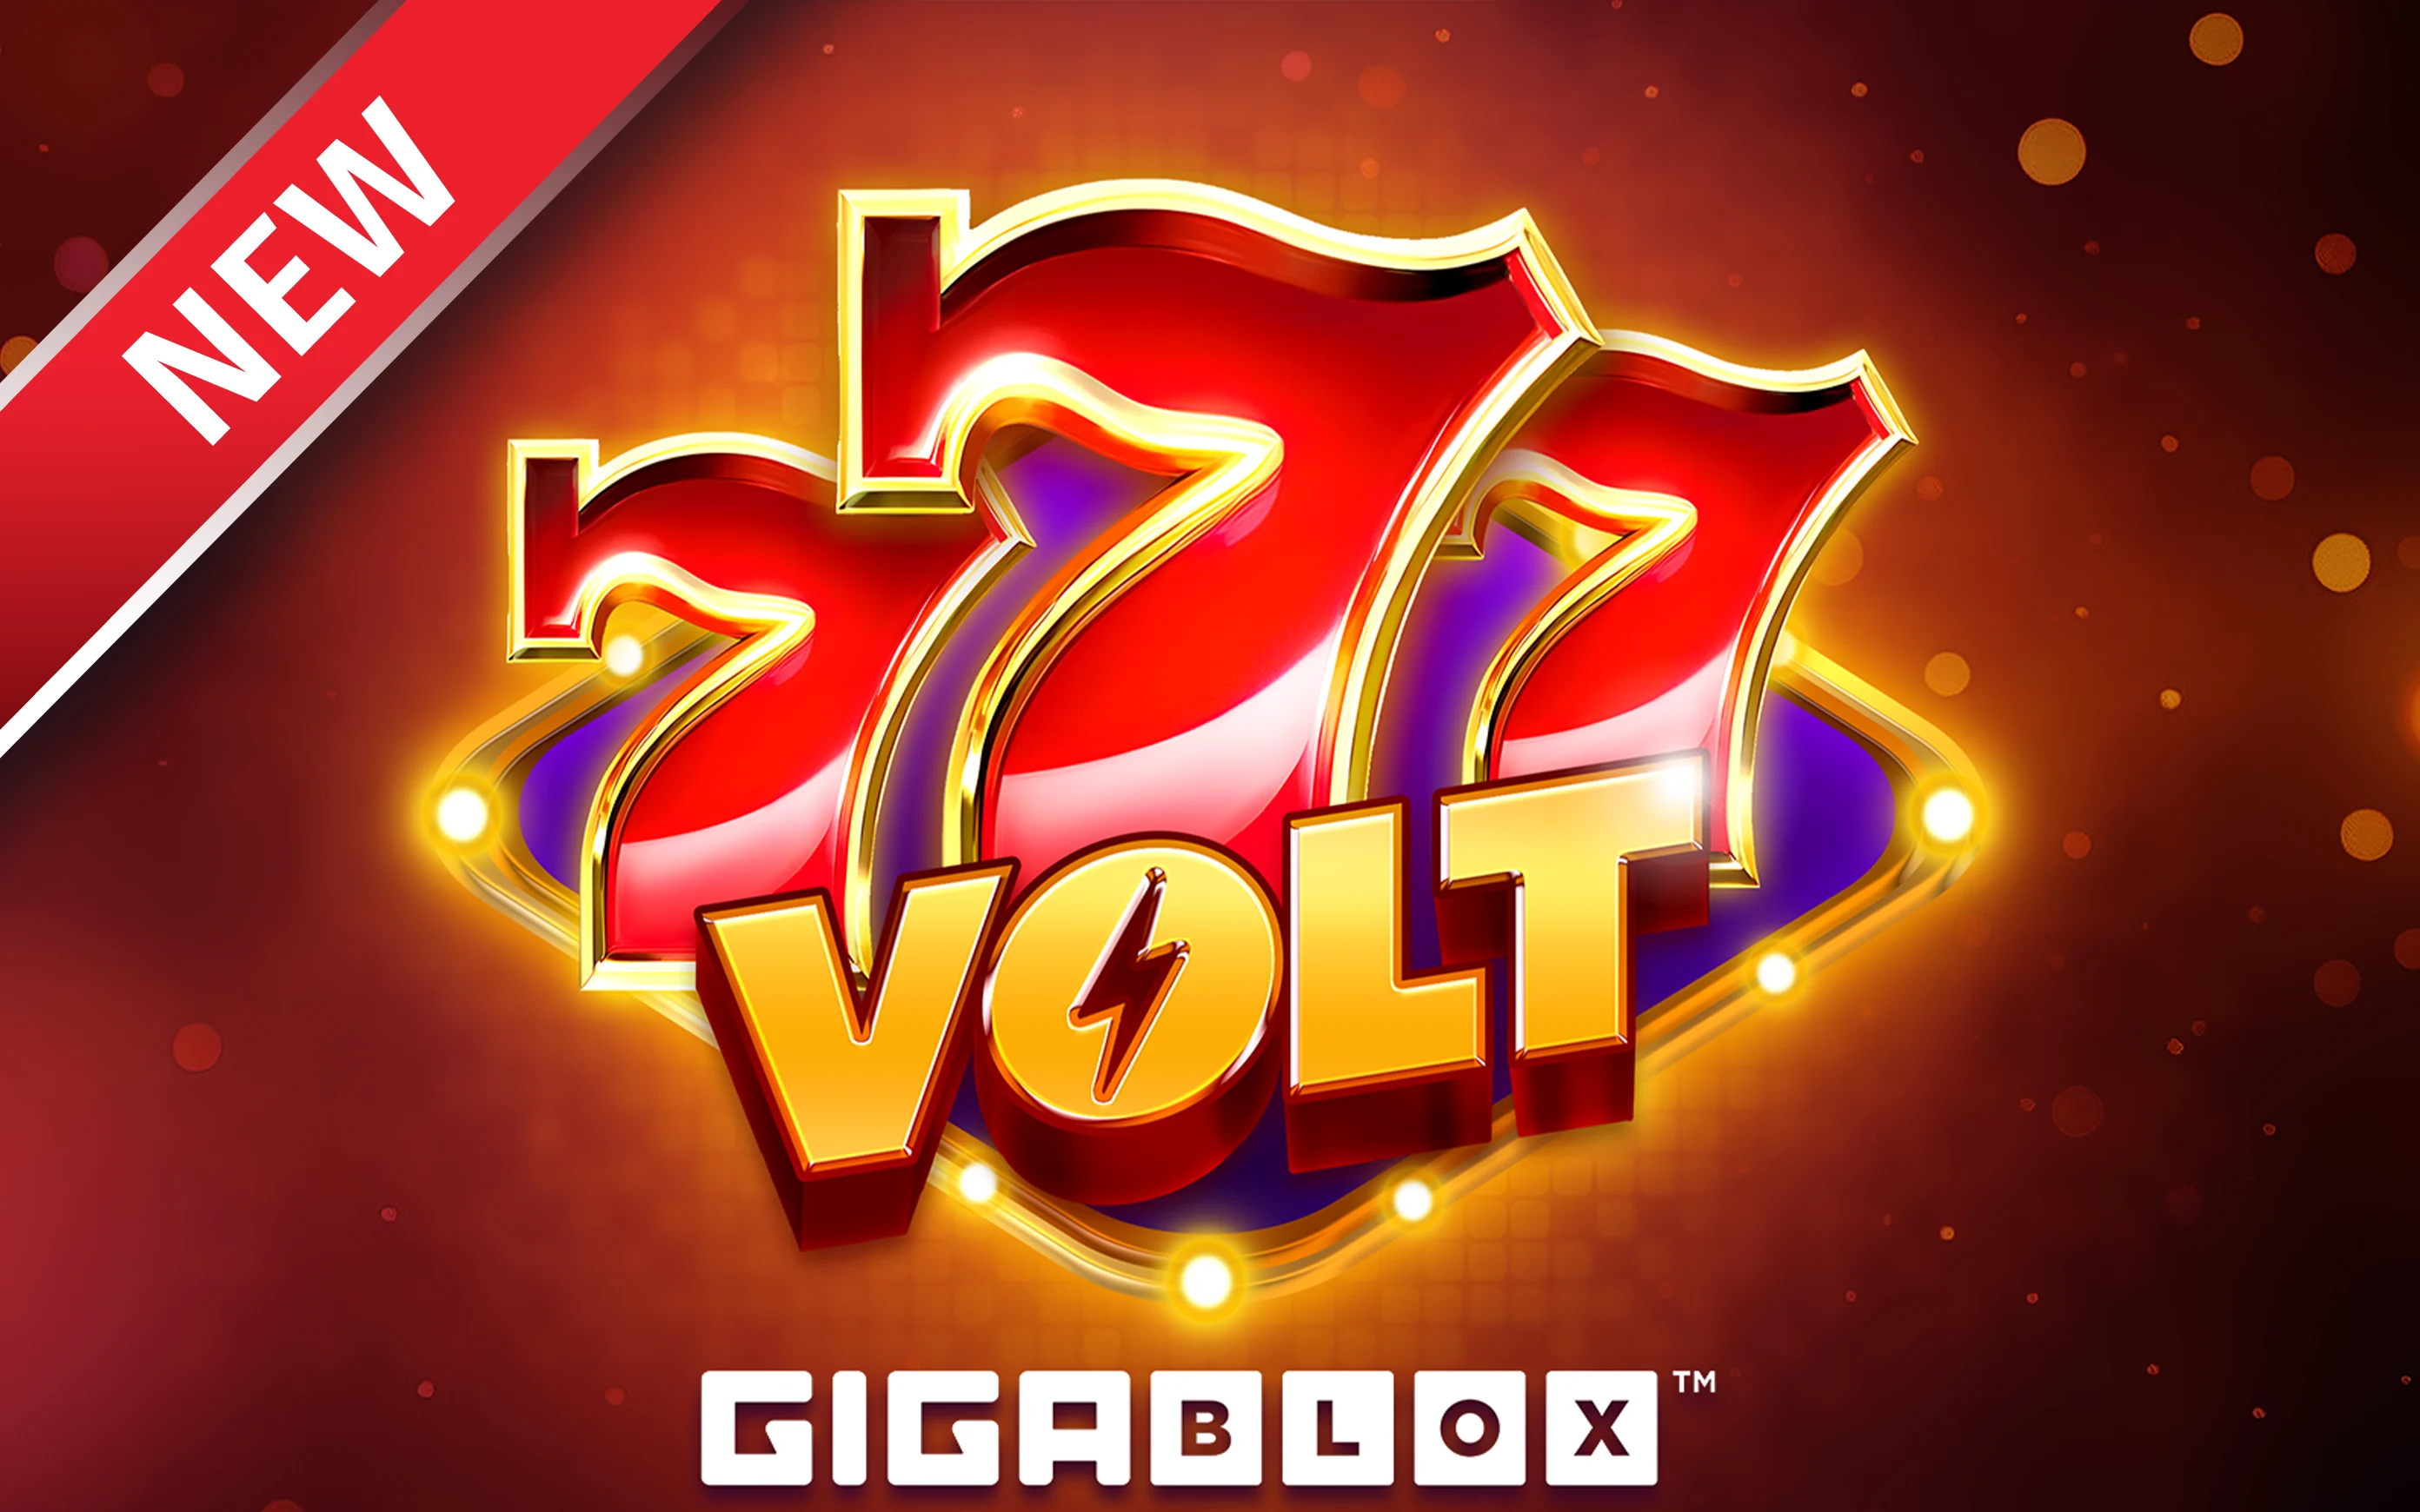 Play 777 Volt GigaBlox™ on Starcasino.be online casino